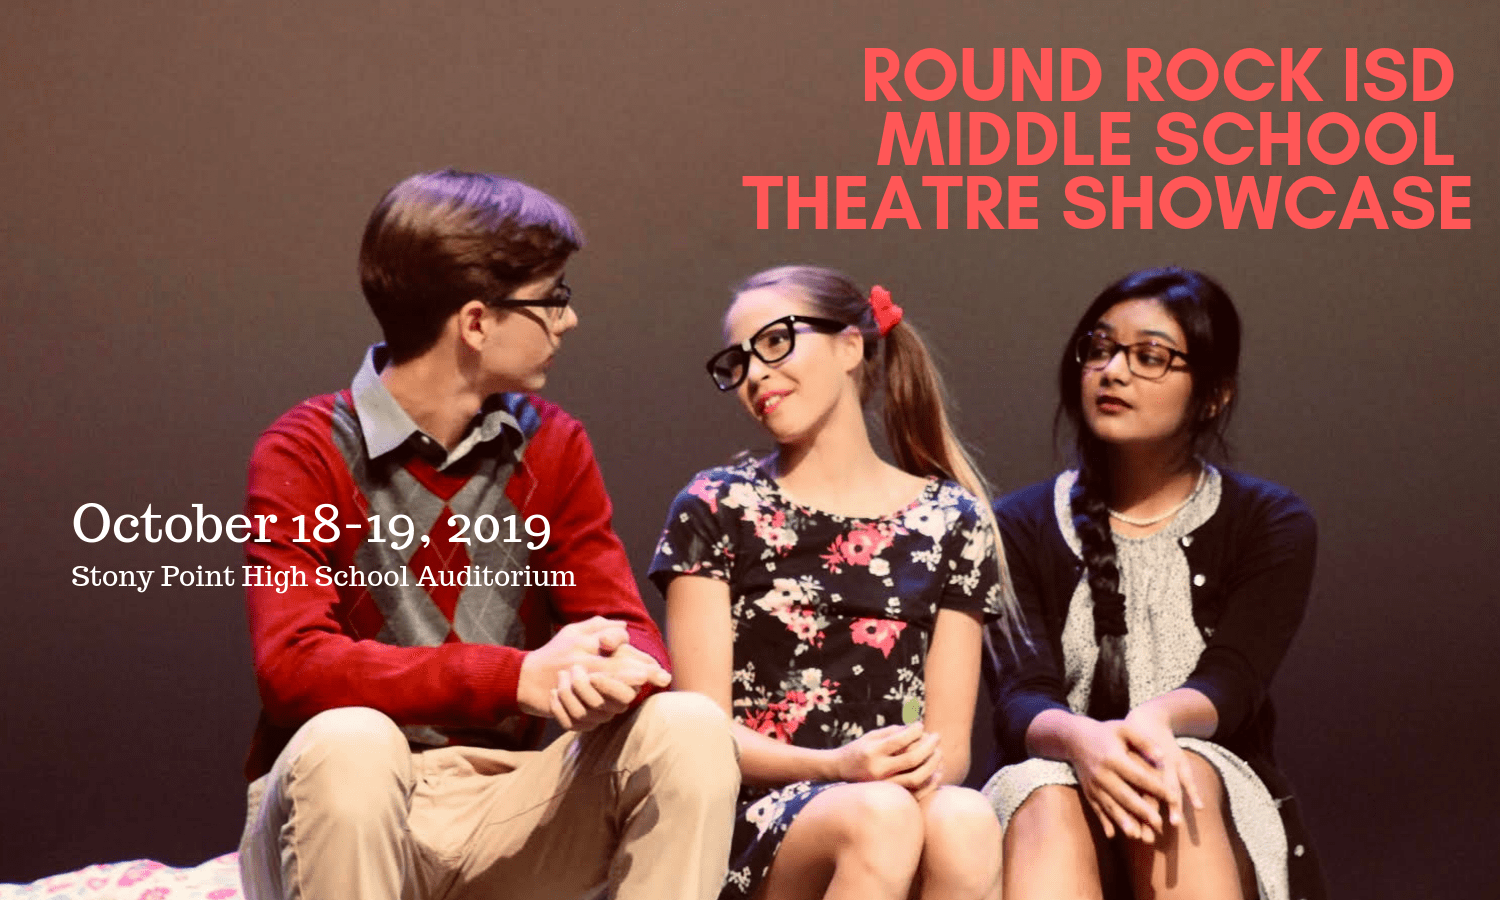 2019 Round Rock ISD Middle School Theatre Showcase